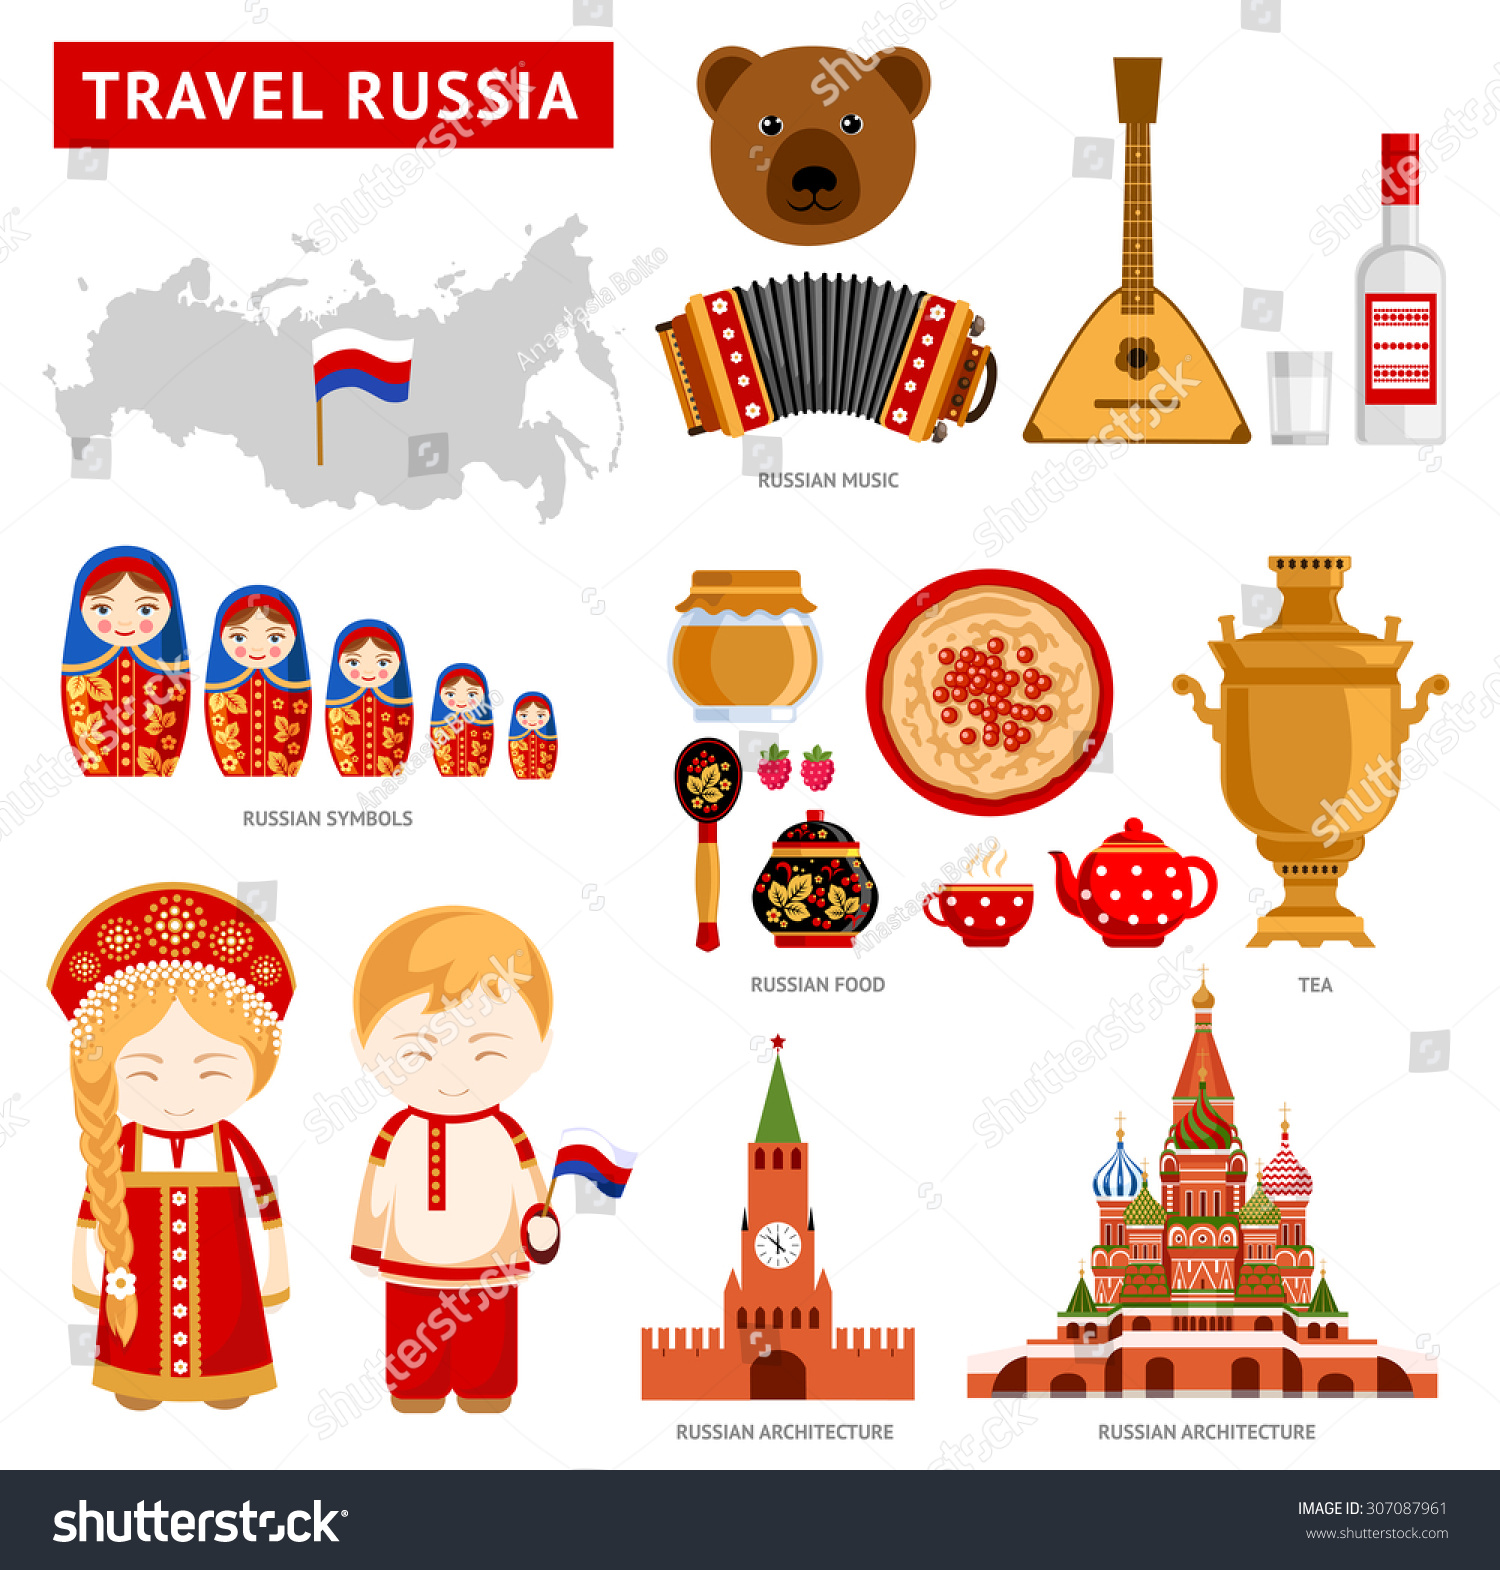 Culture Art Travel Russian 15